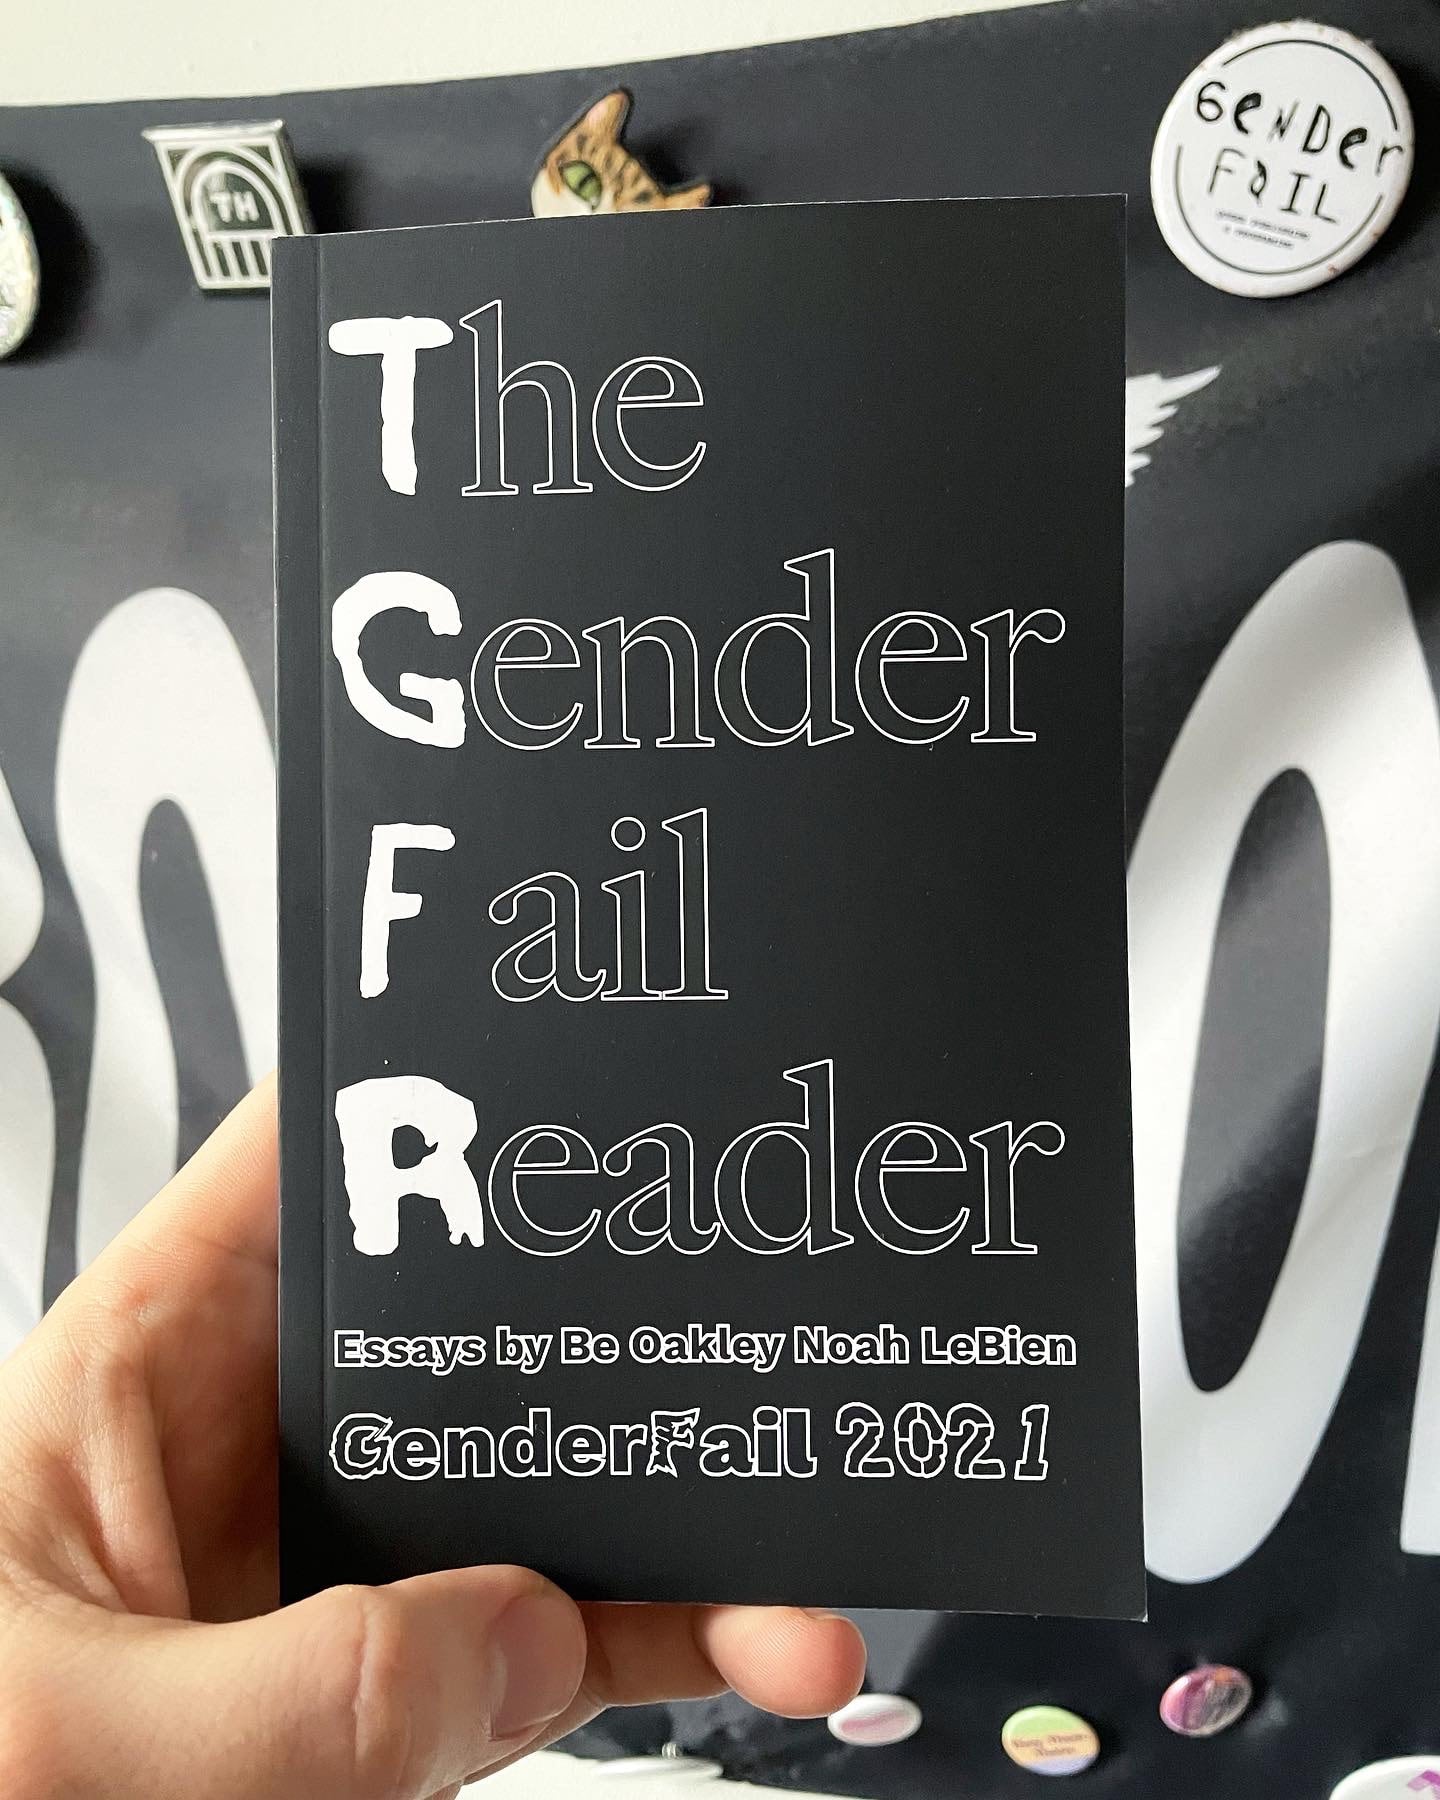 The GenderFail Reader